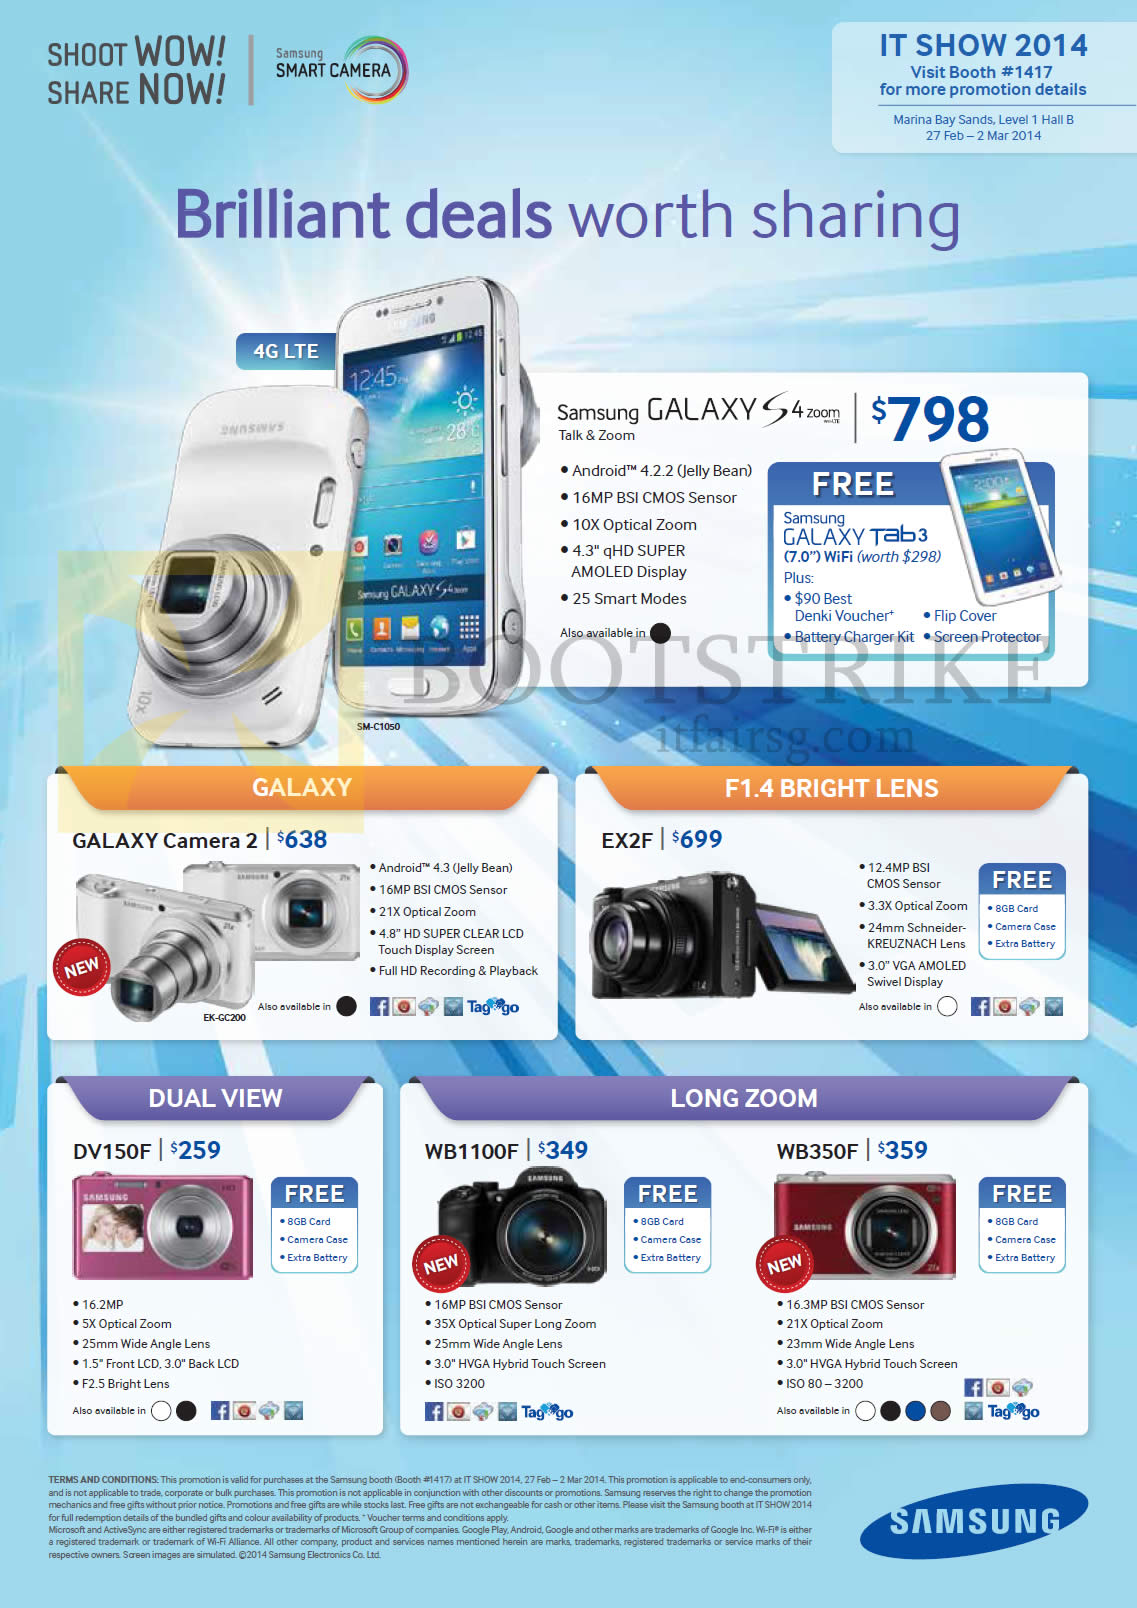 IT SHOW 2014 price list image brochure of Samsung Digital Cameras Galaxy S4 Zoom, Galaxy Camera 2, EX2F, DV150F, WB1100F, WB350F